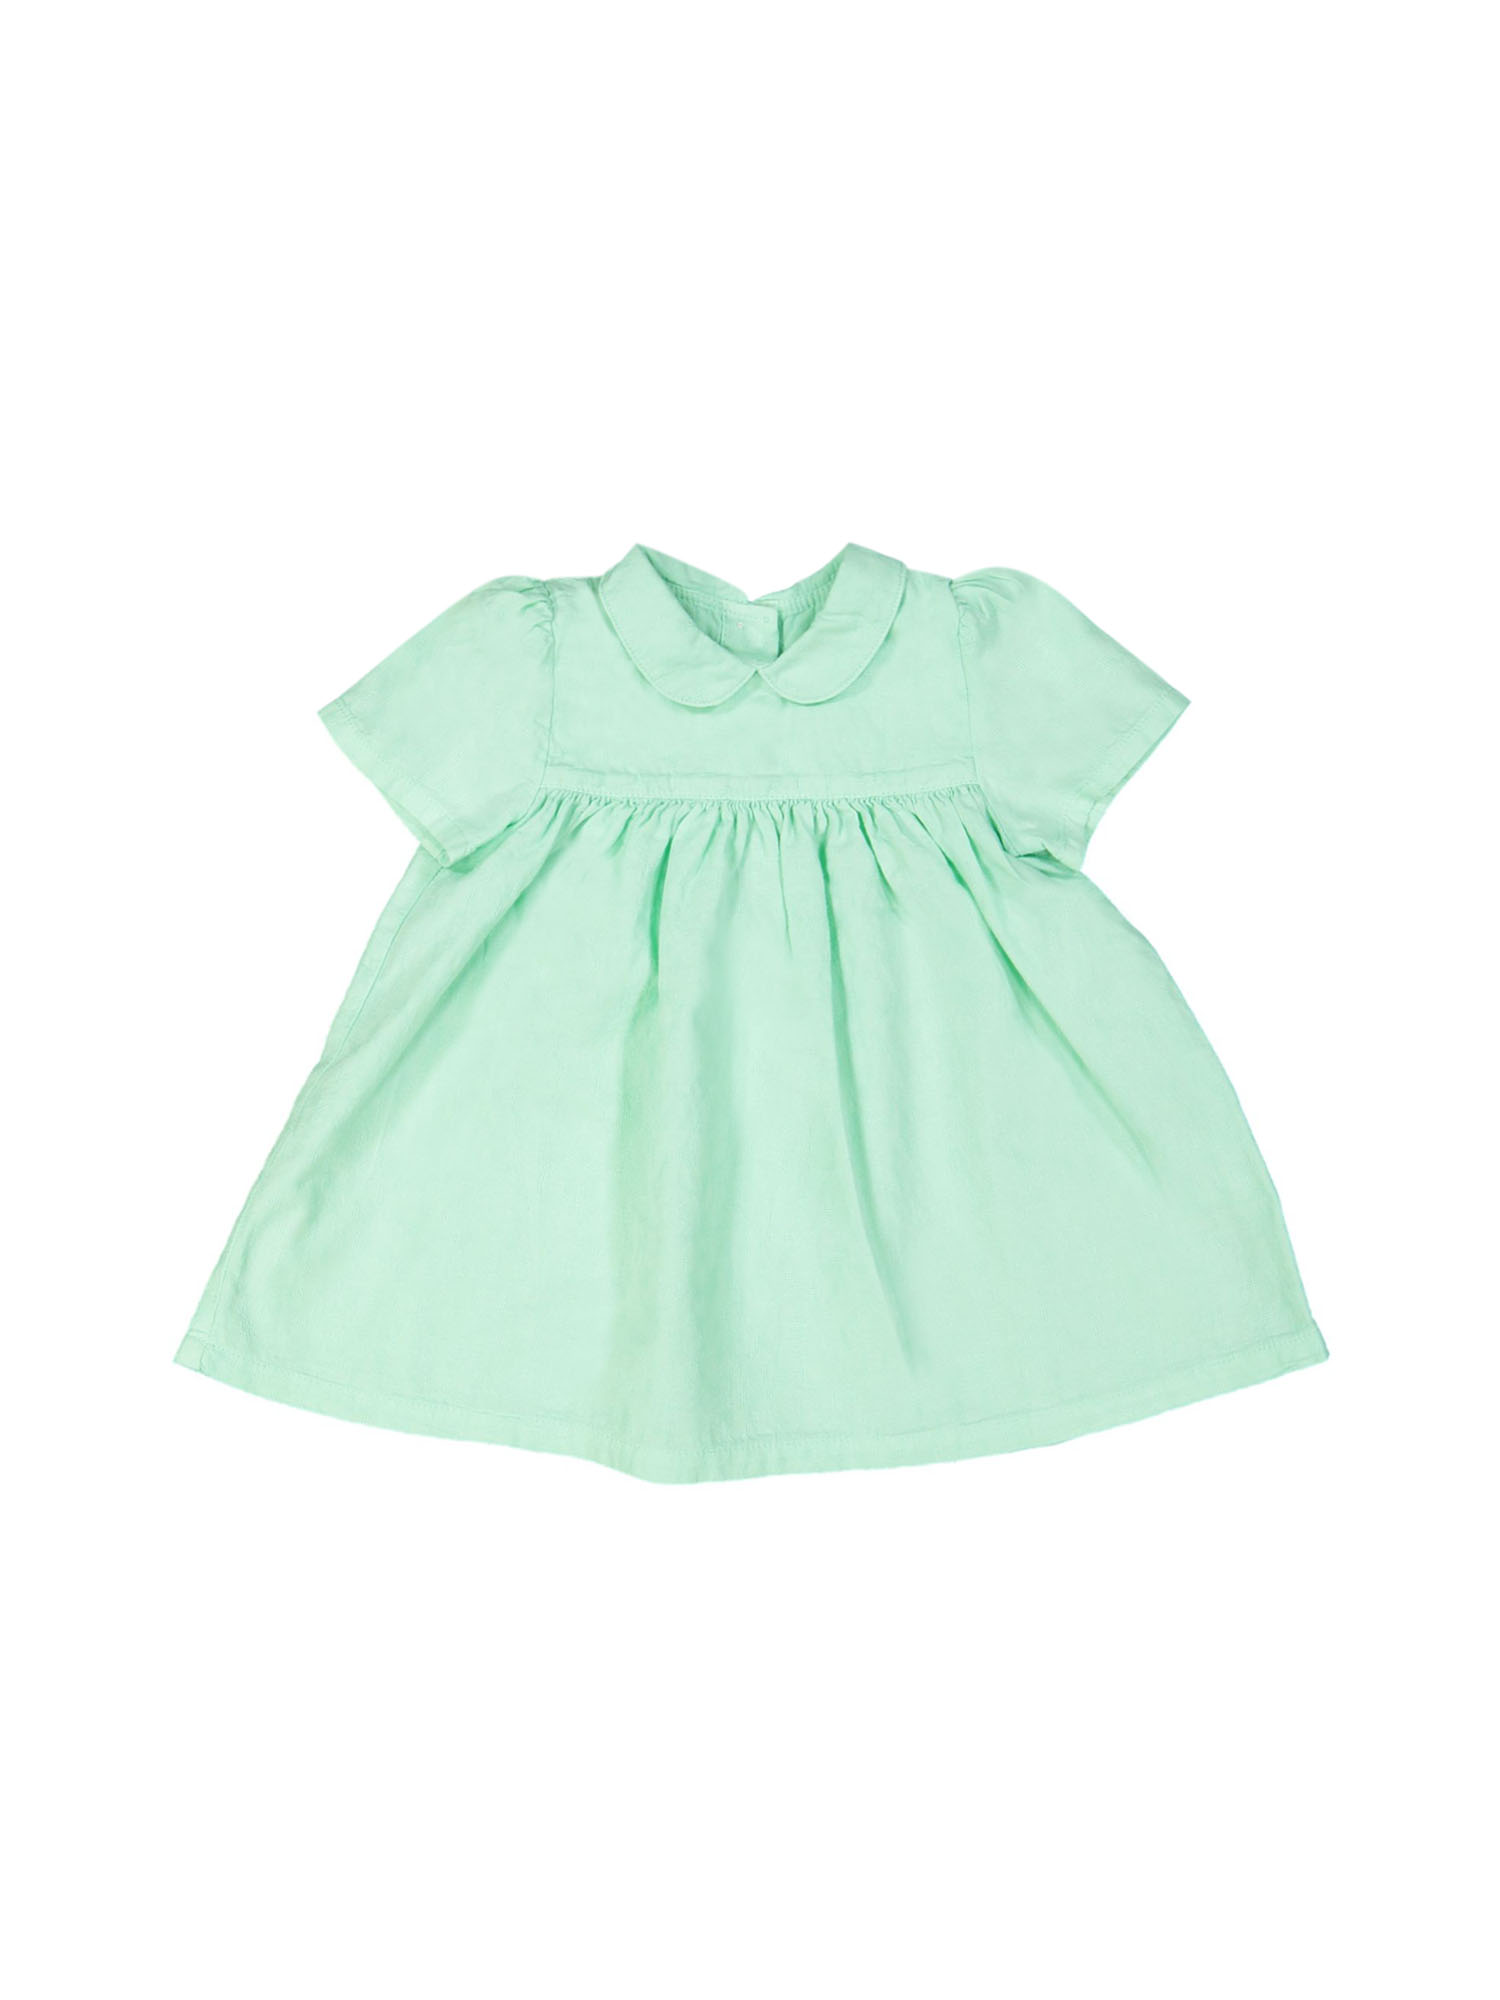 jurk mini groen 03m